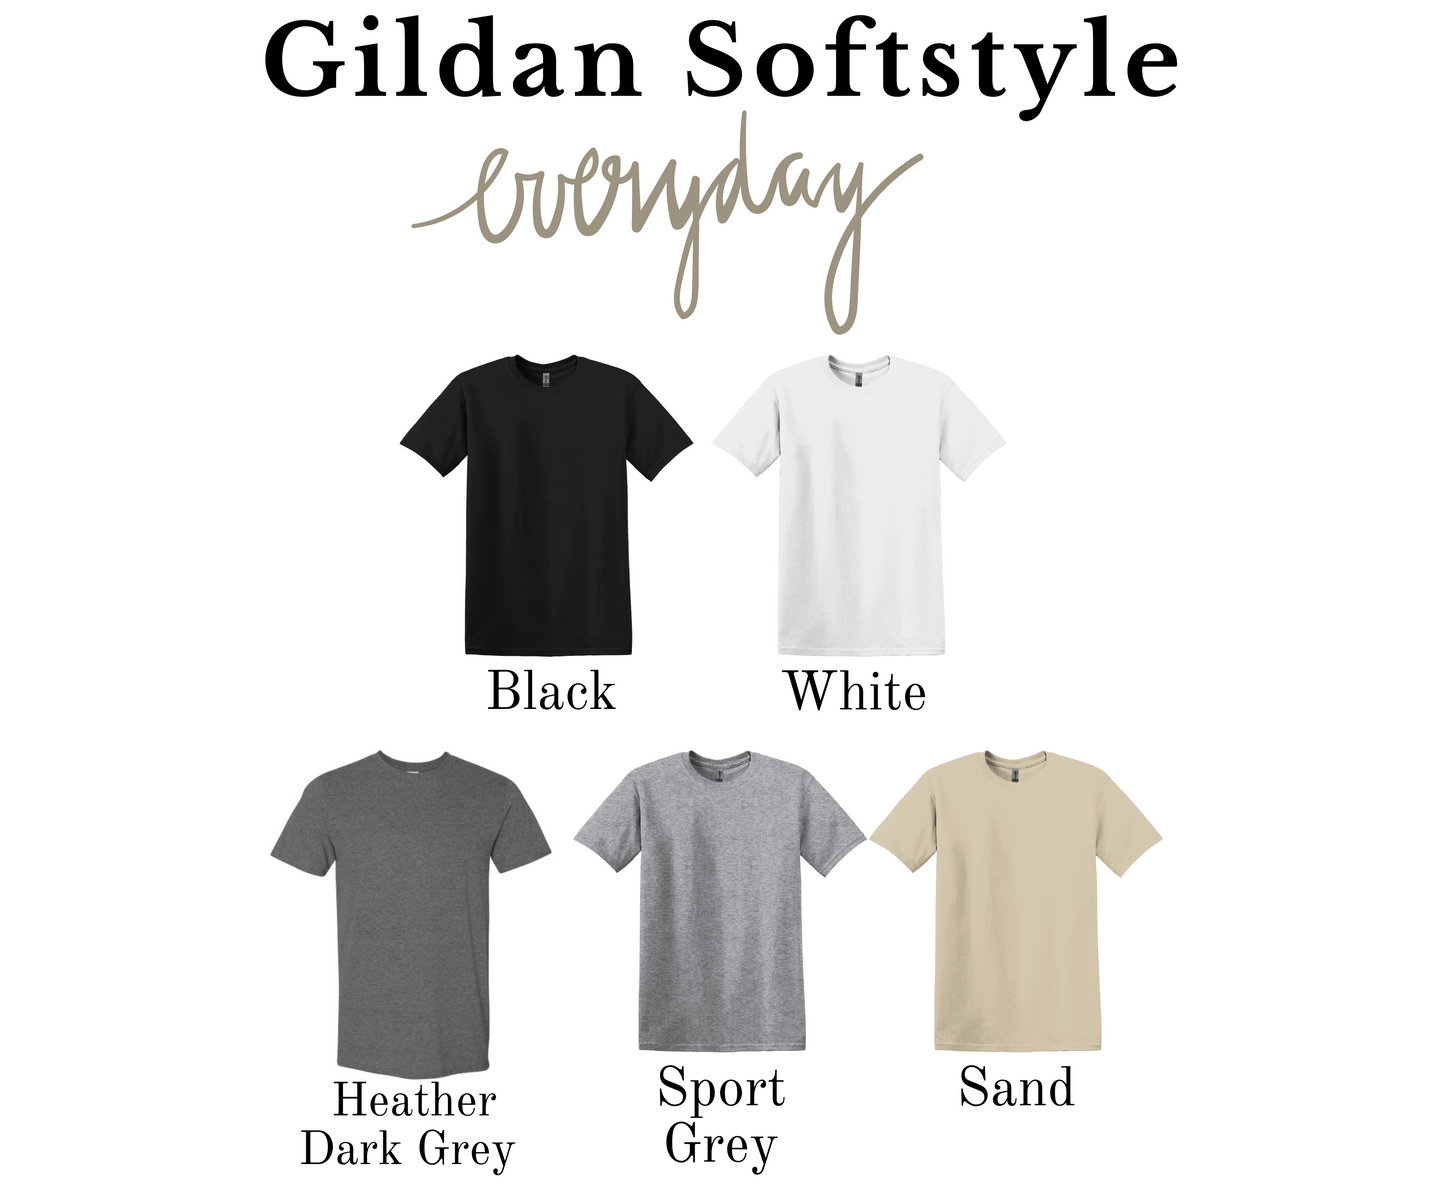 Game Day Panthers Gildan Softstyle Sweatshirt or T-shirt